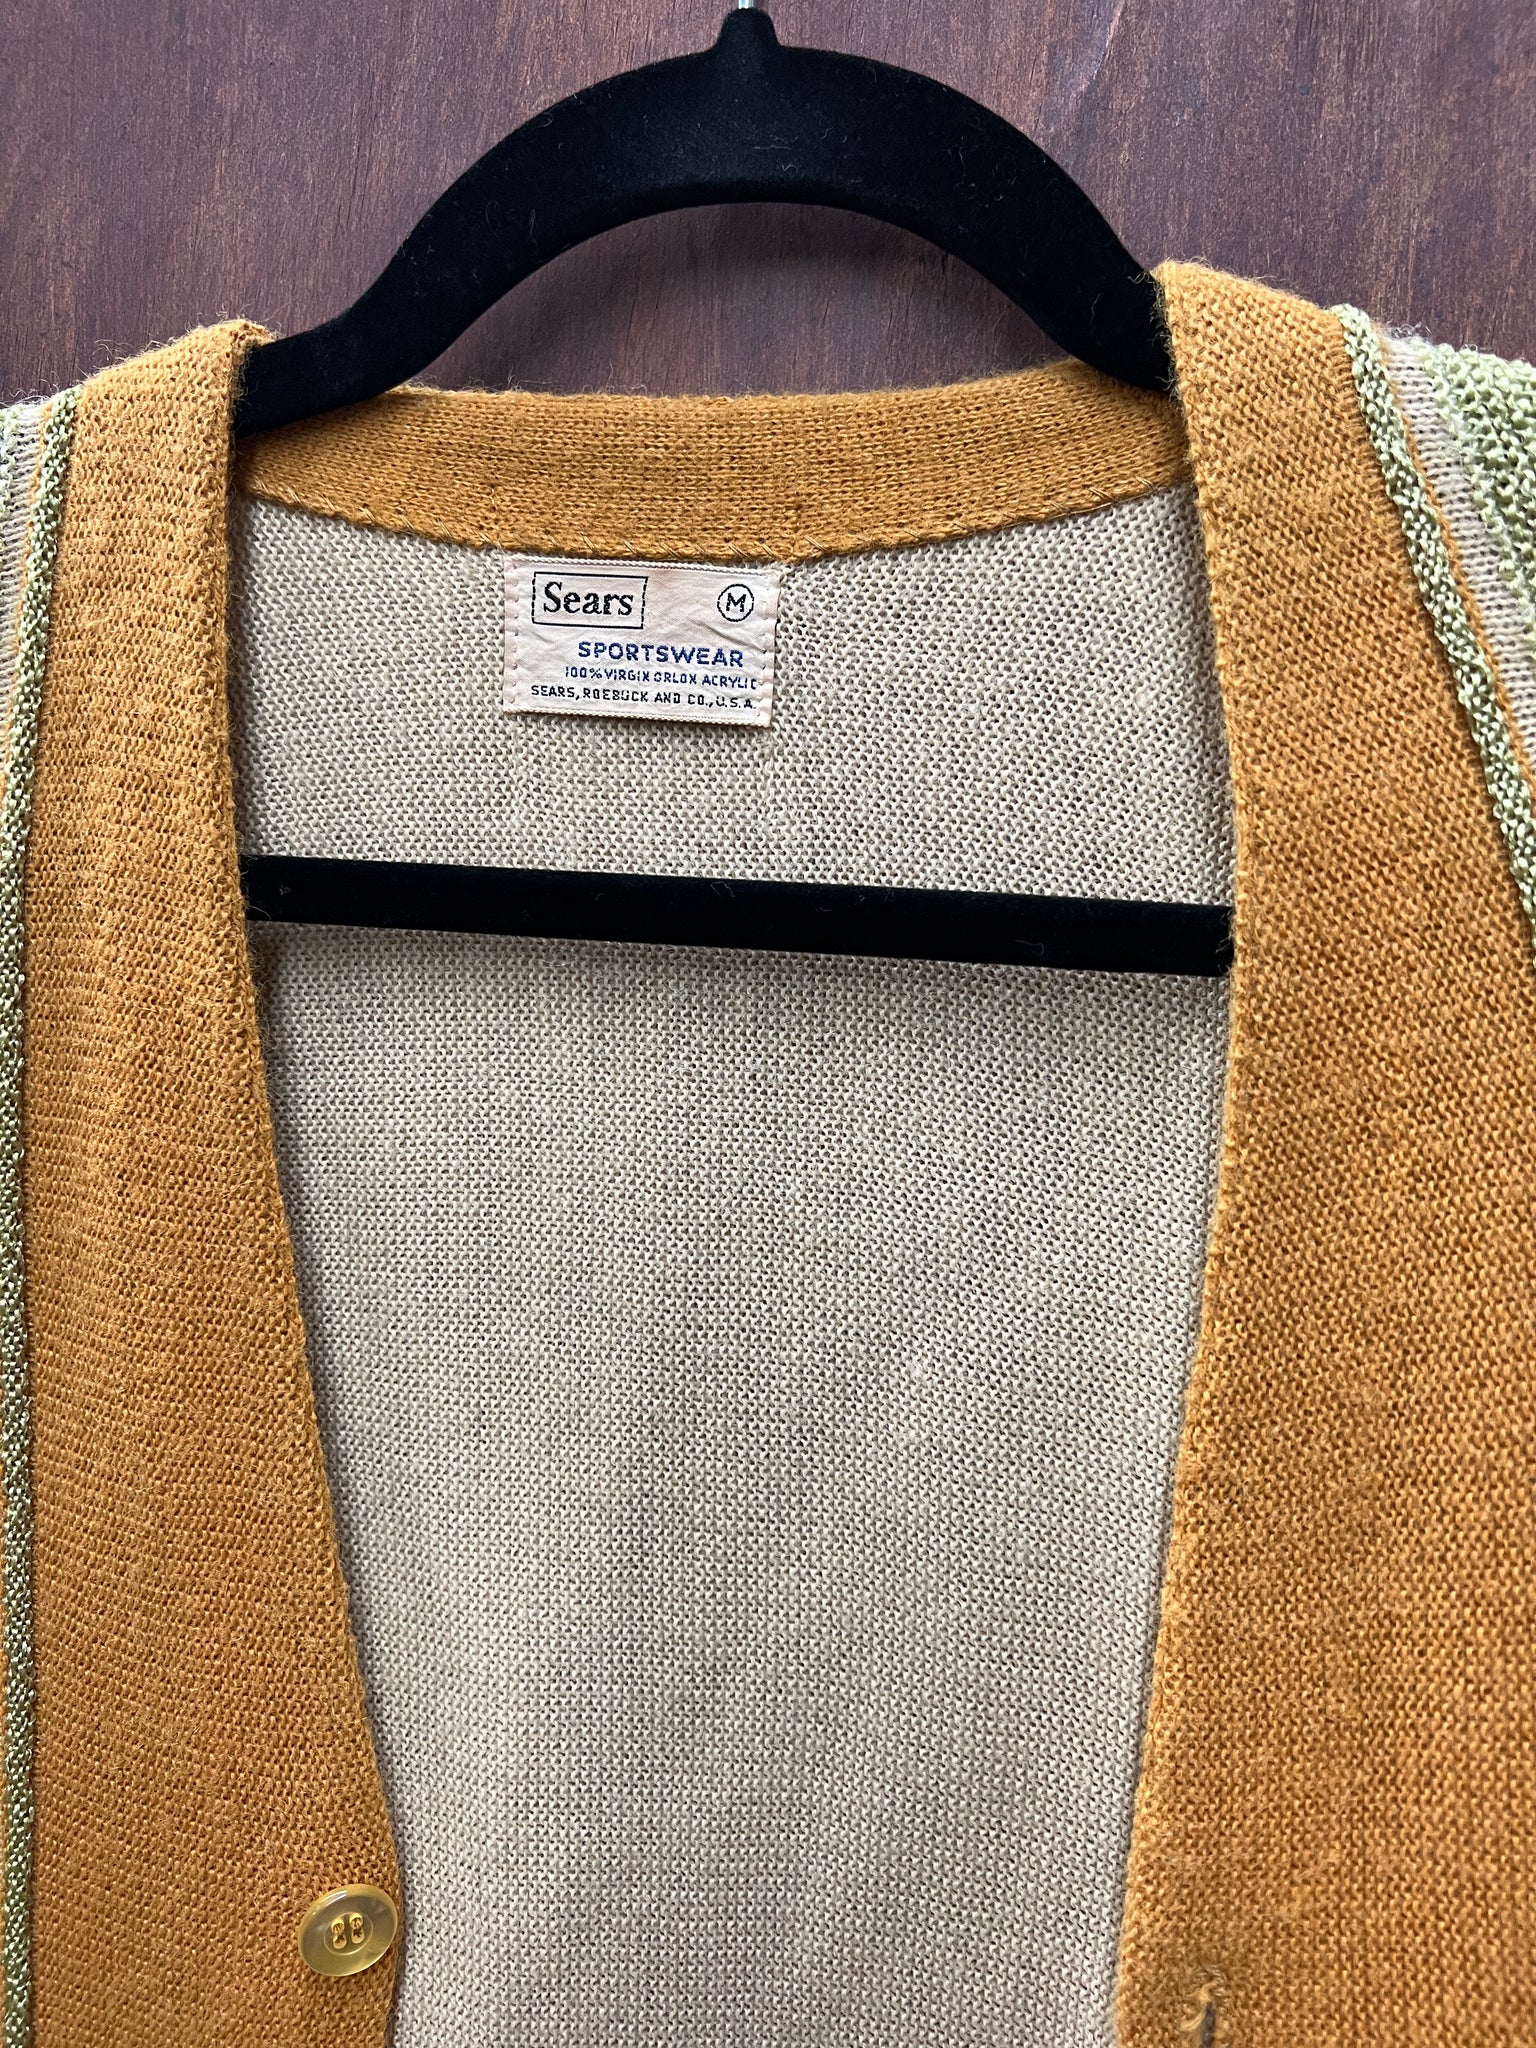 1960s MENS SWEATER-Sears mustard striped cardigan